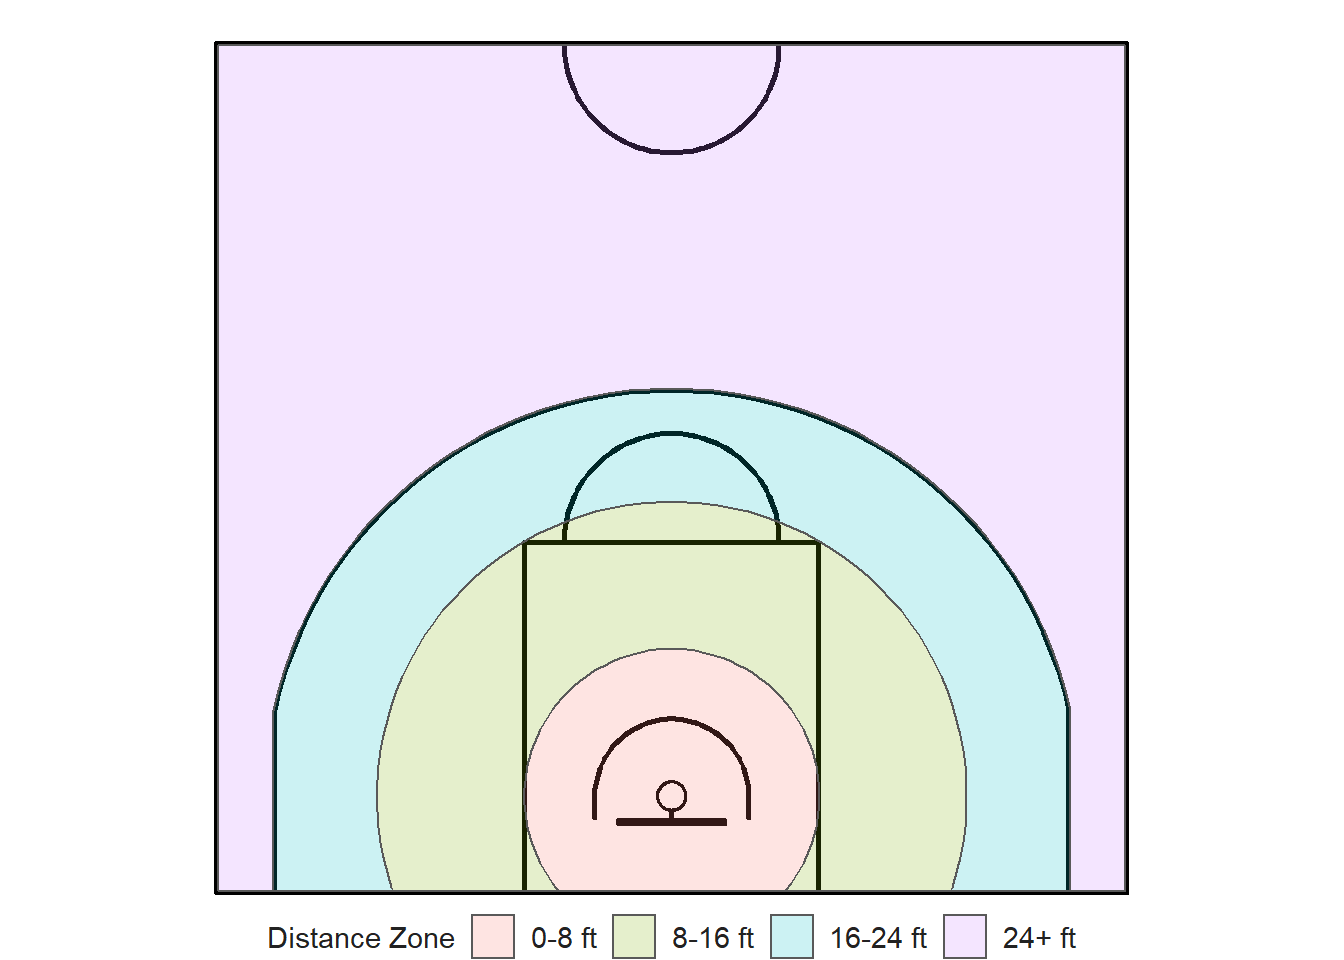 Distance zones for FIBA basketball court